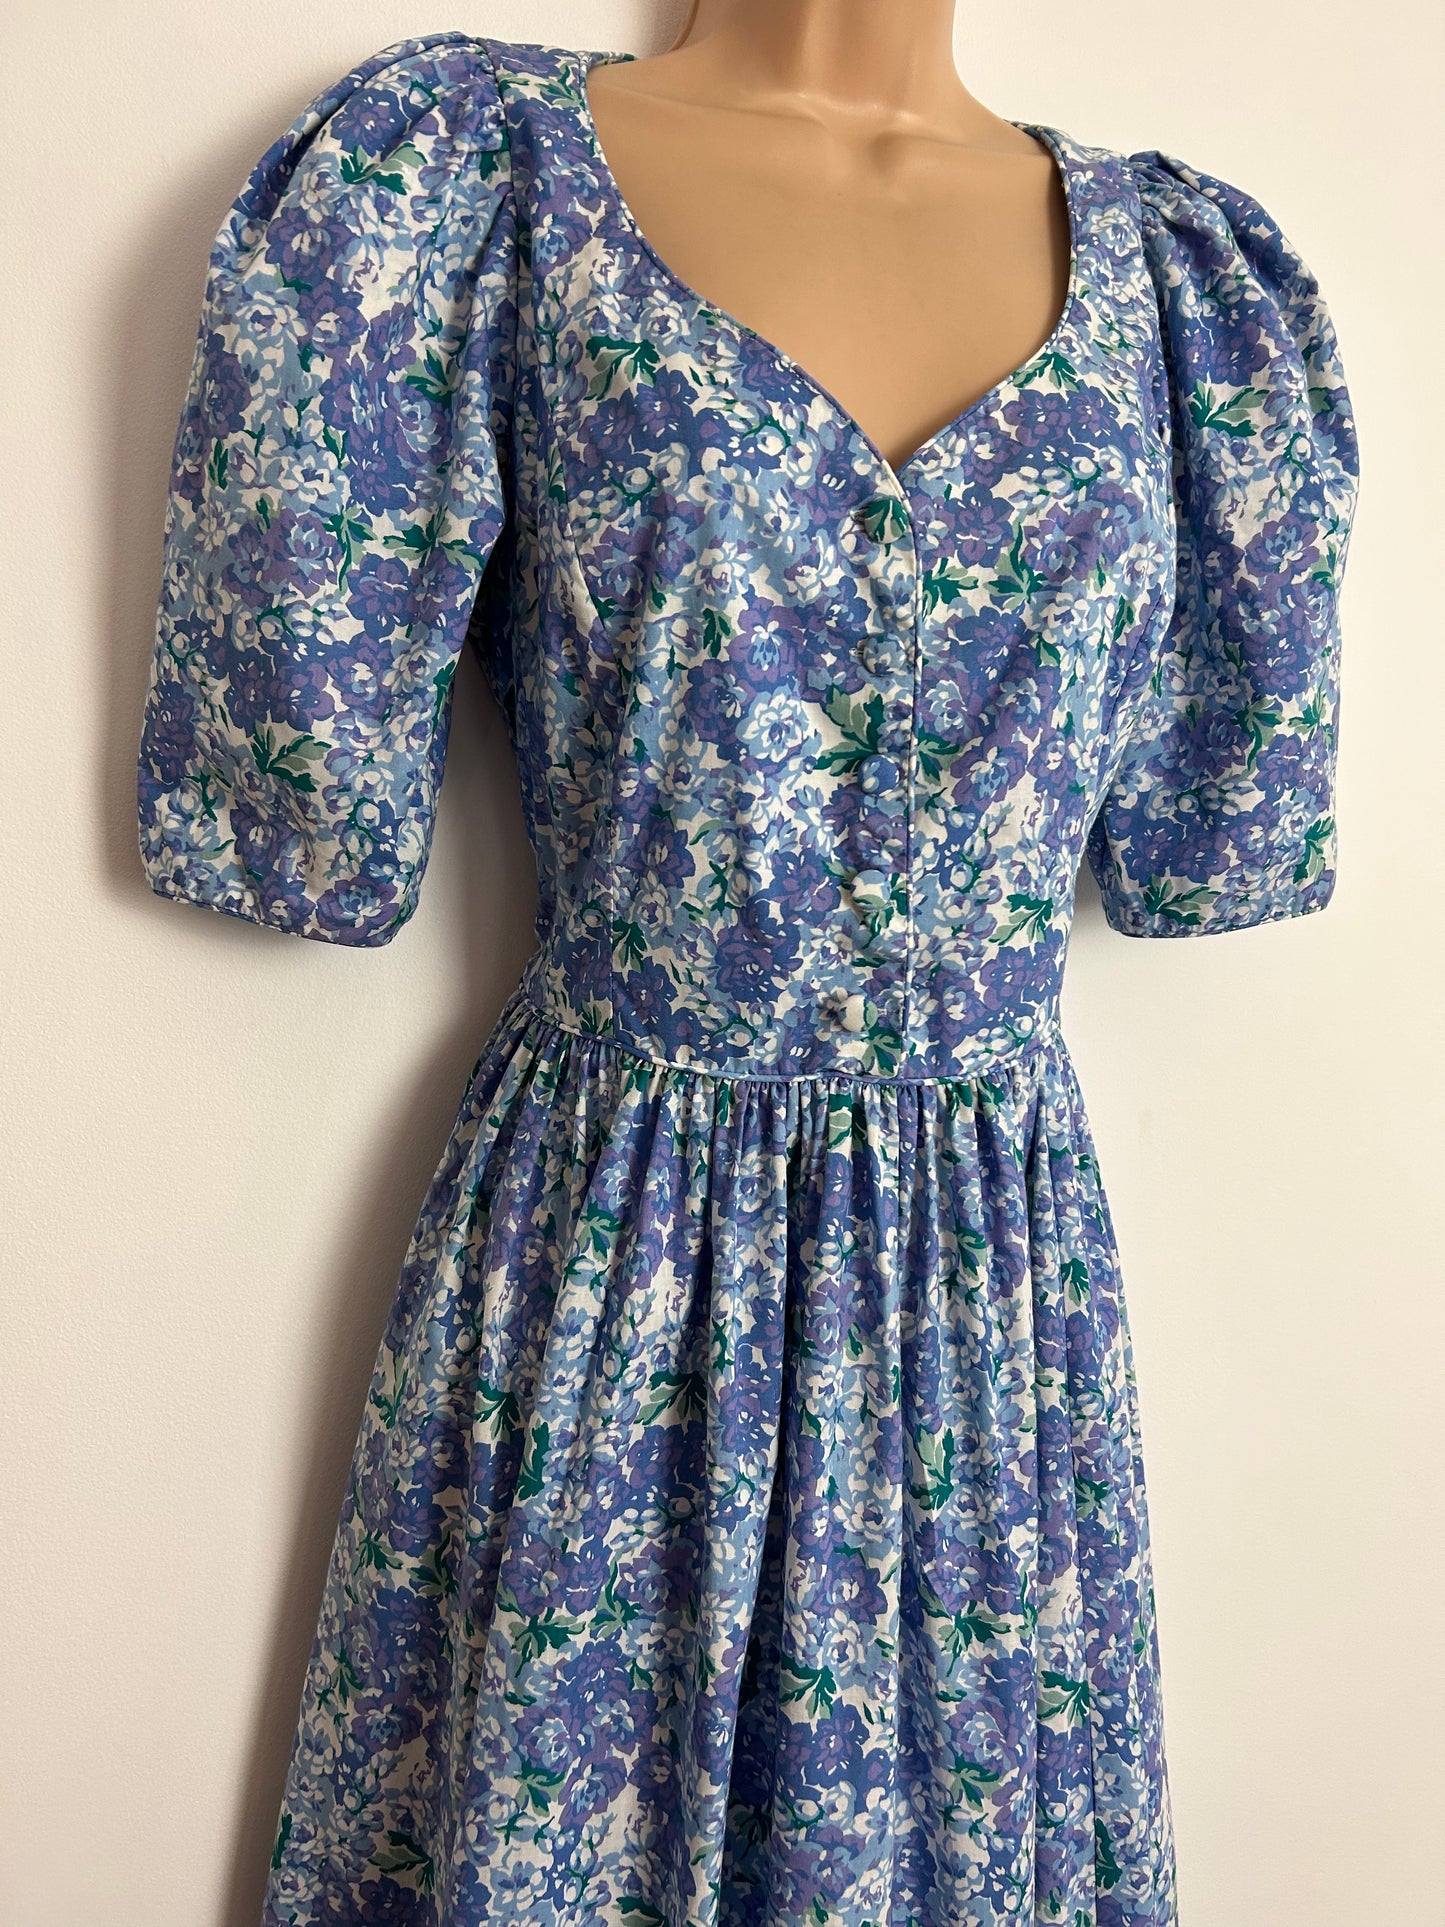 Vintage 1980s LAURA ASHLEY UK Size 10-12 (Labelled 14) Blue Tones Floral Print Short Sleeve Gather Pleated Midi Dress